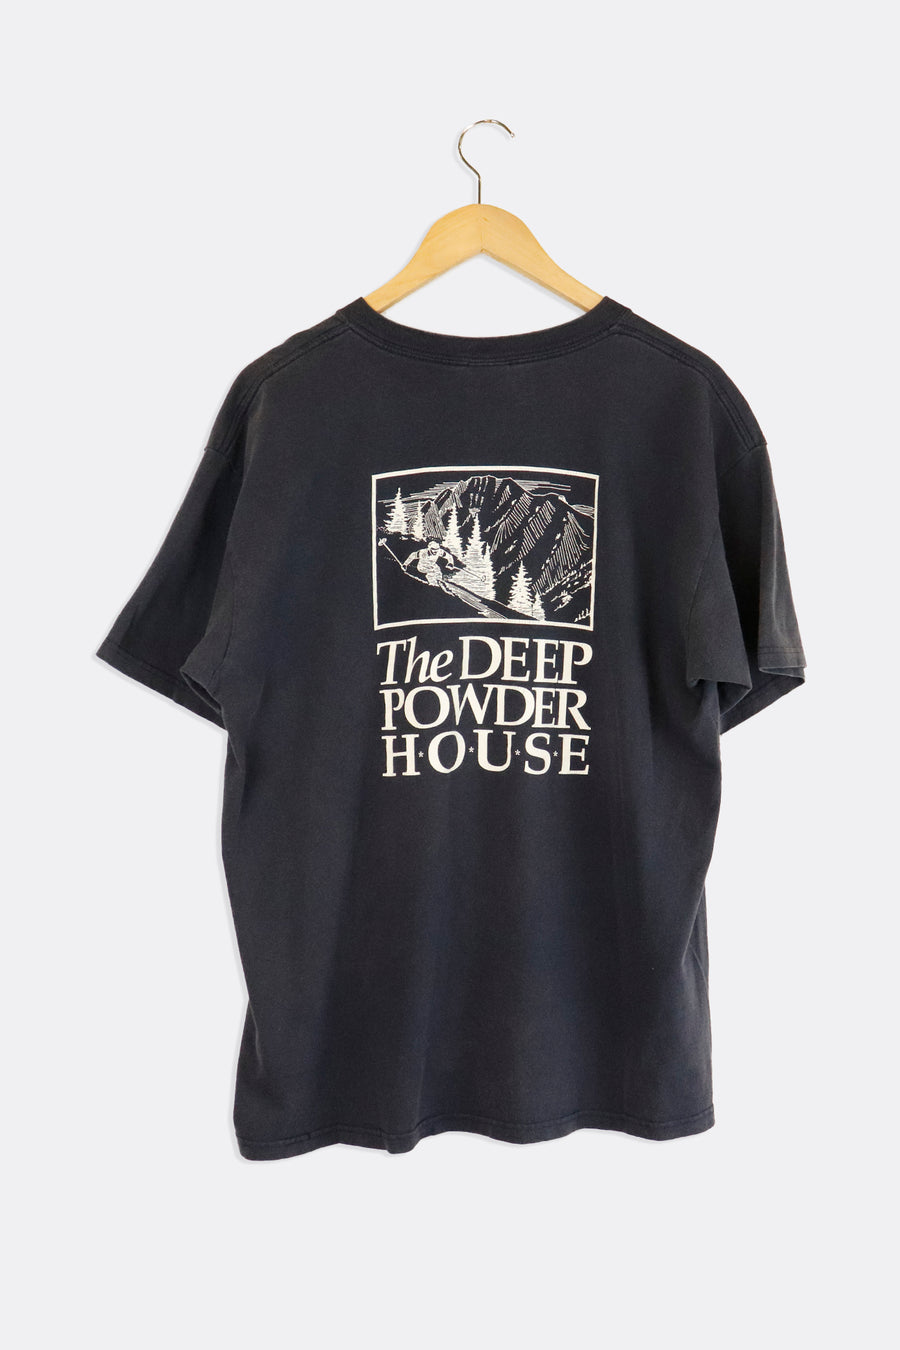 Vintage Alta Deep Powder House Skiing Graphic T Shirt Sz L